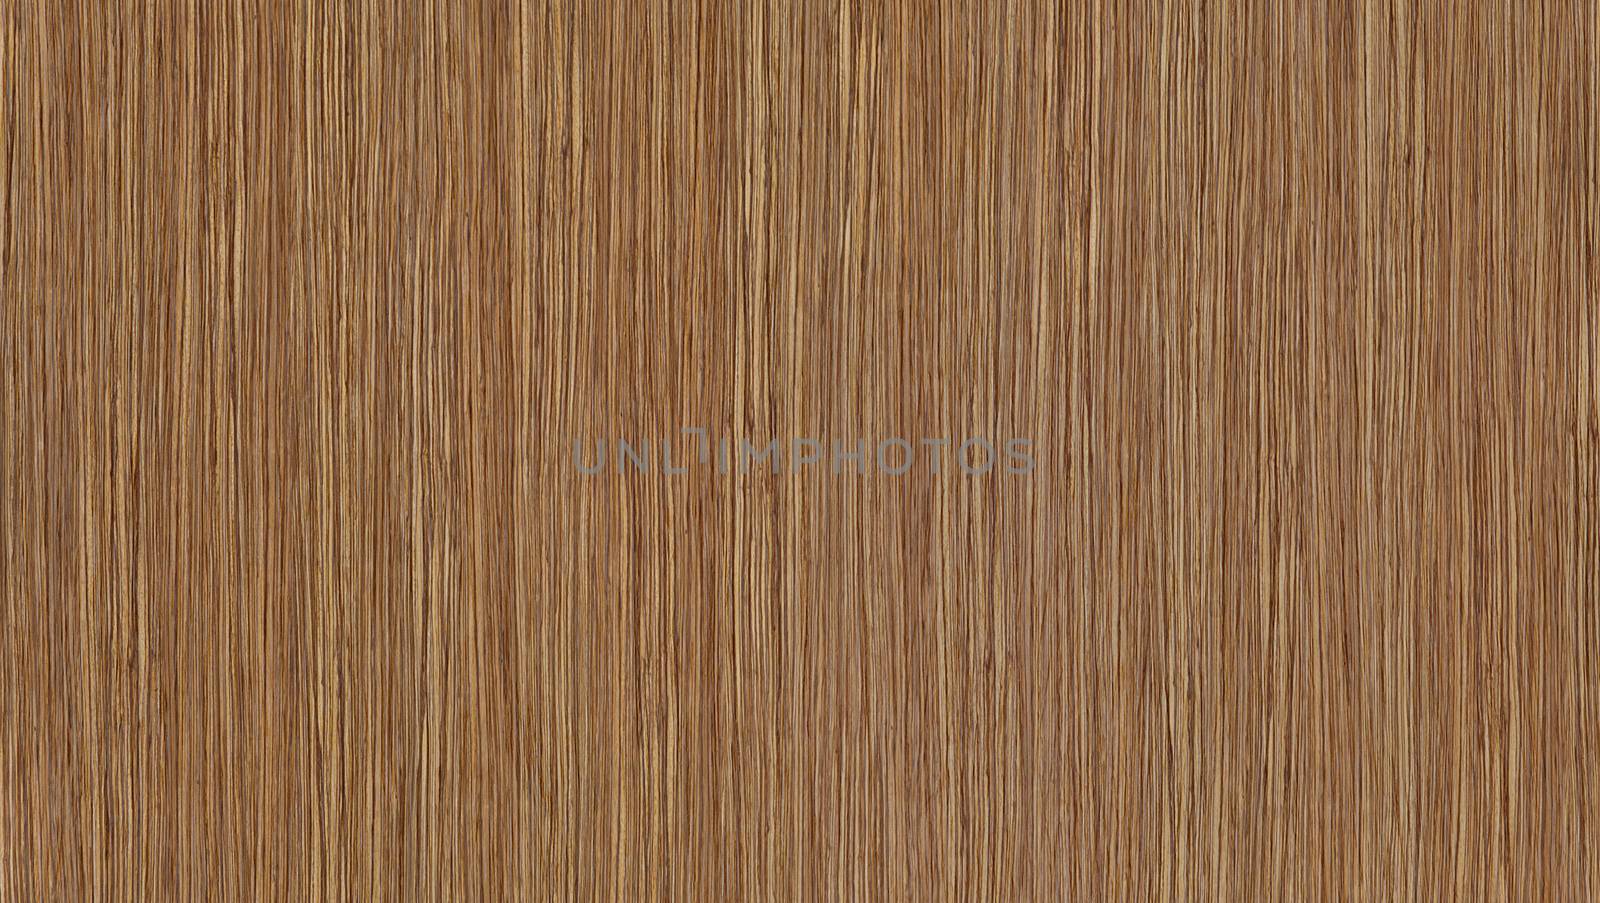 grunge wood pattern texture by ivo_13